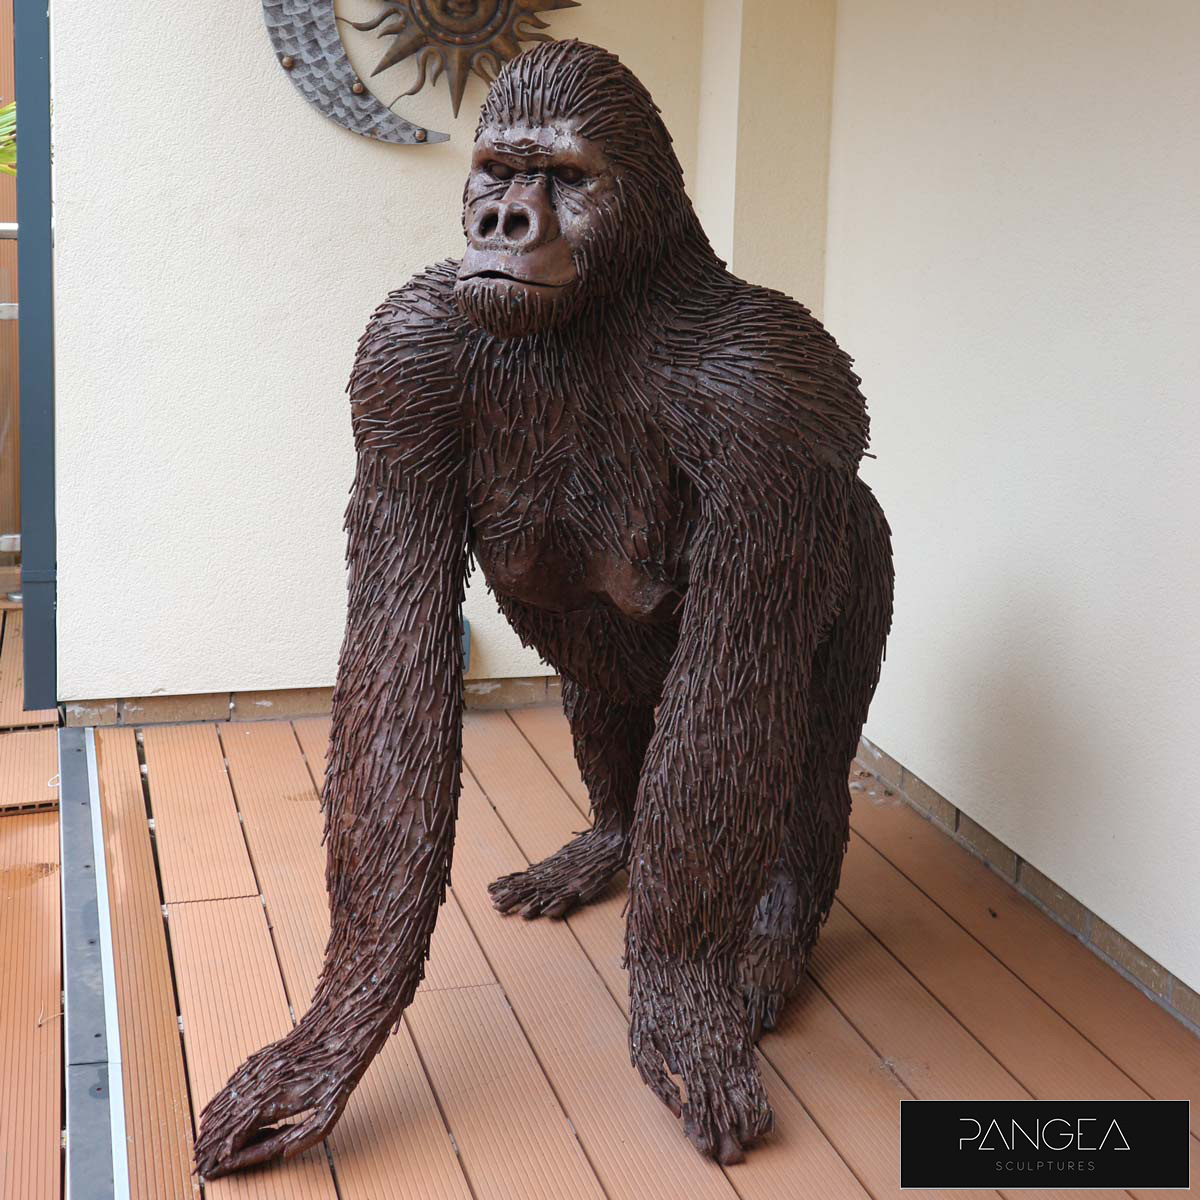 Pangea 4ft (121.9cm) Gorilla Ornamental Metal Structure - Life Size